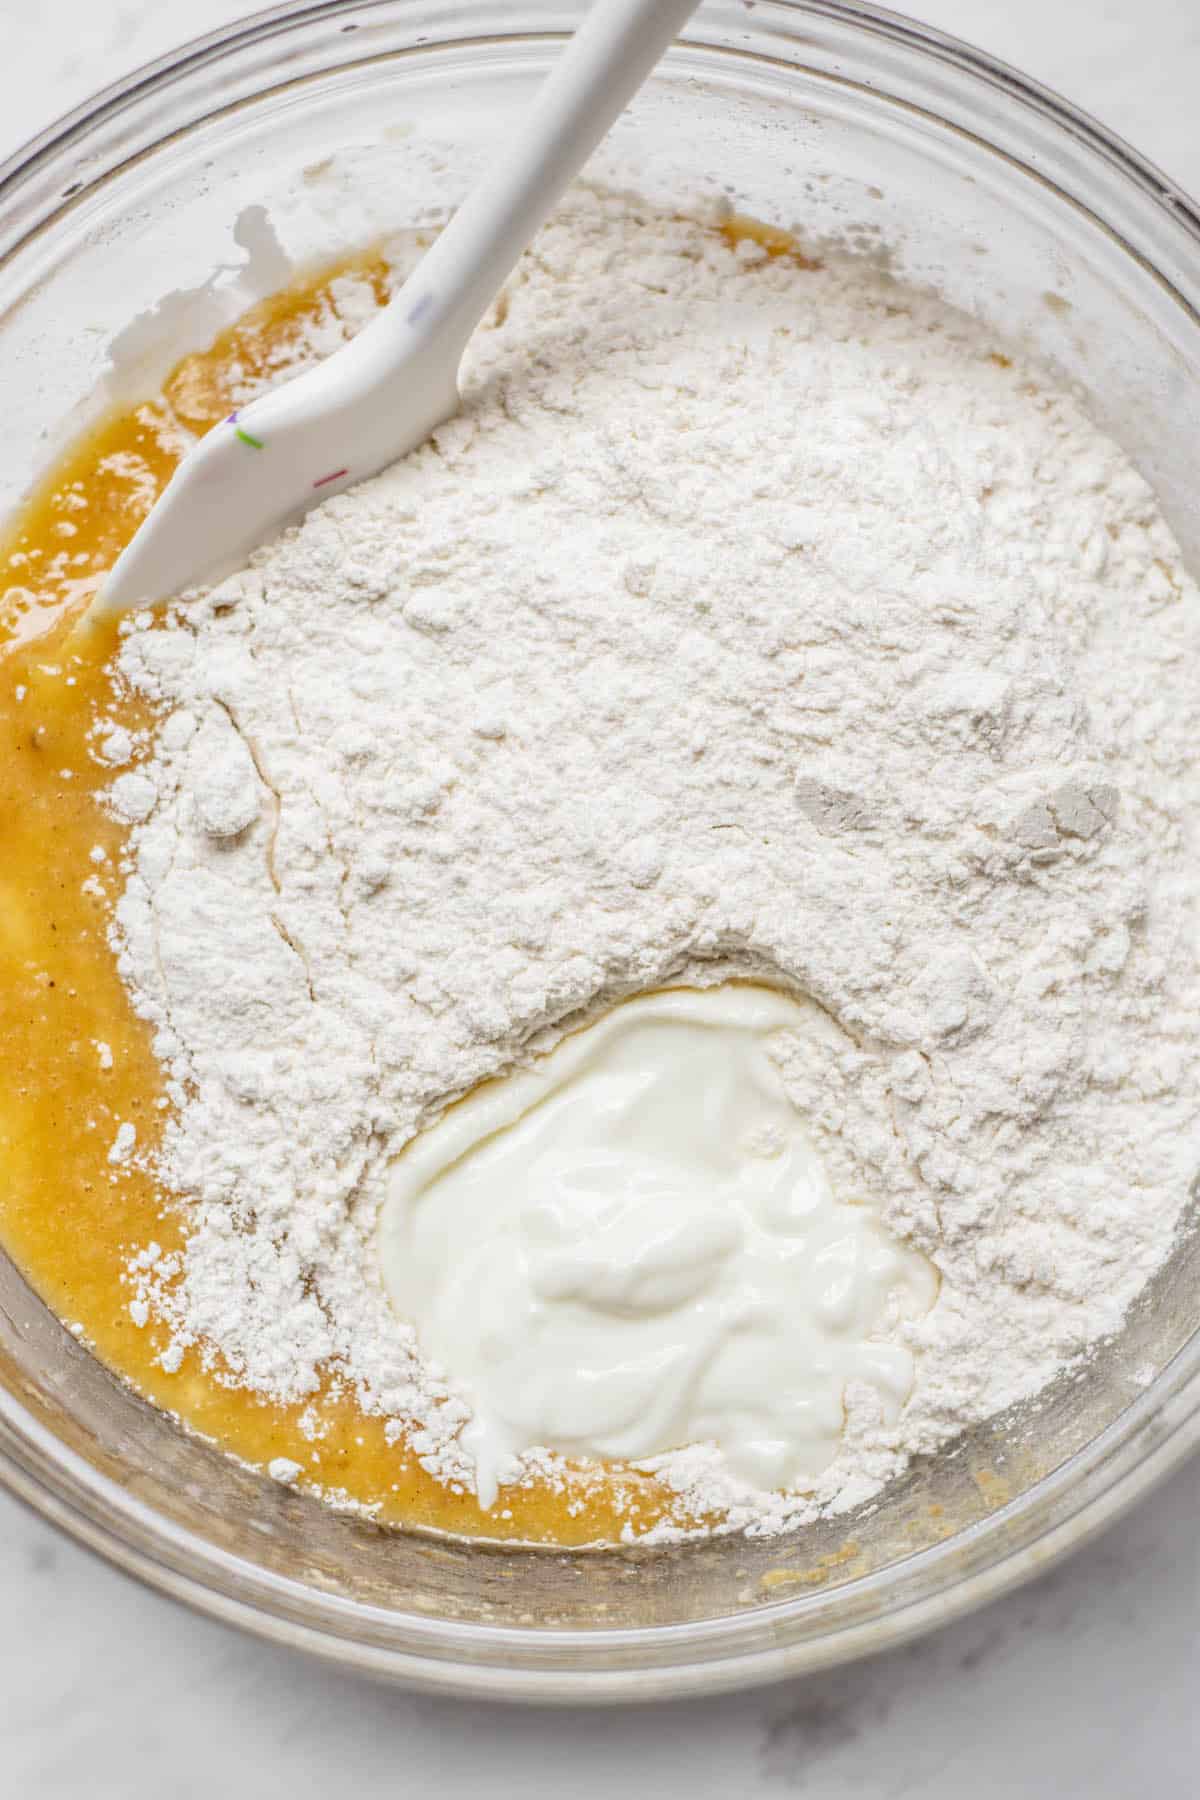 flour, yogurt in batter.